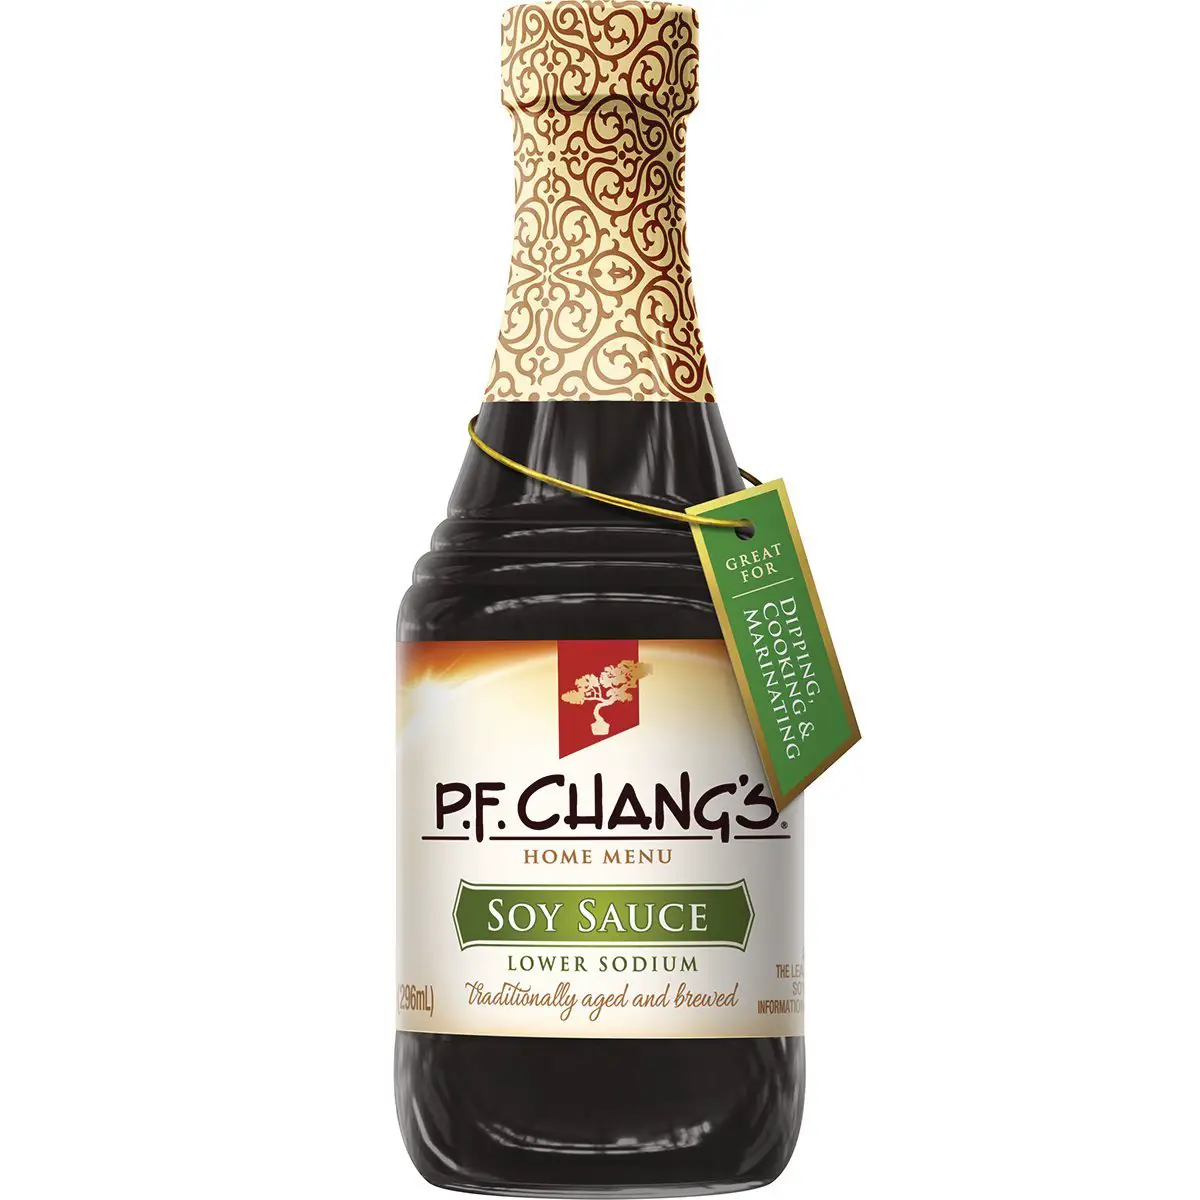 Amazon.com : P.F. Changâs Home Menu Lower Sodium Soy Sauce ...